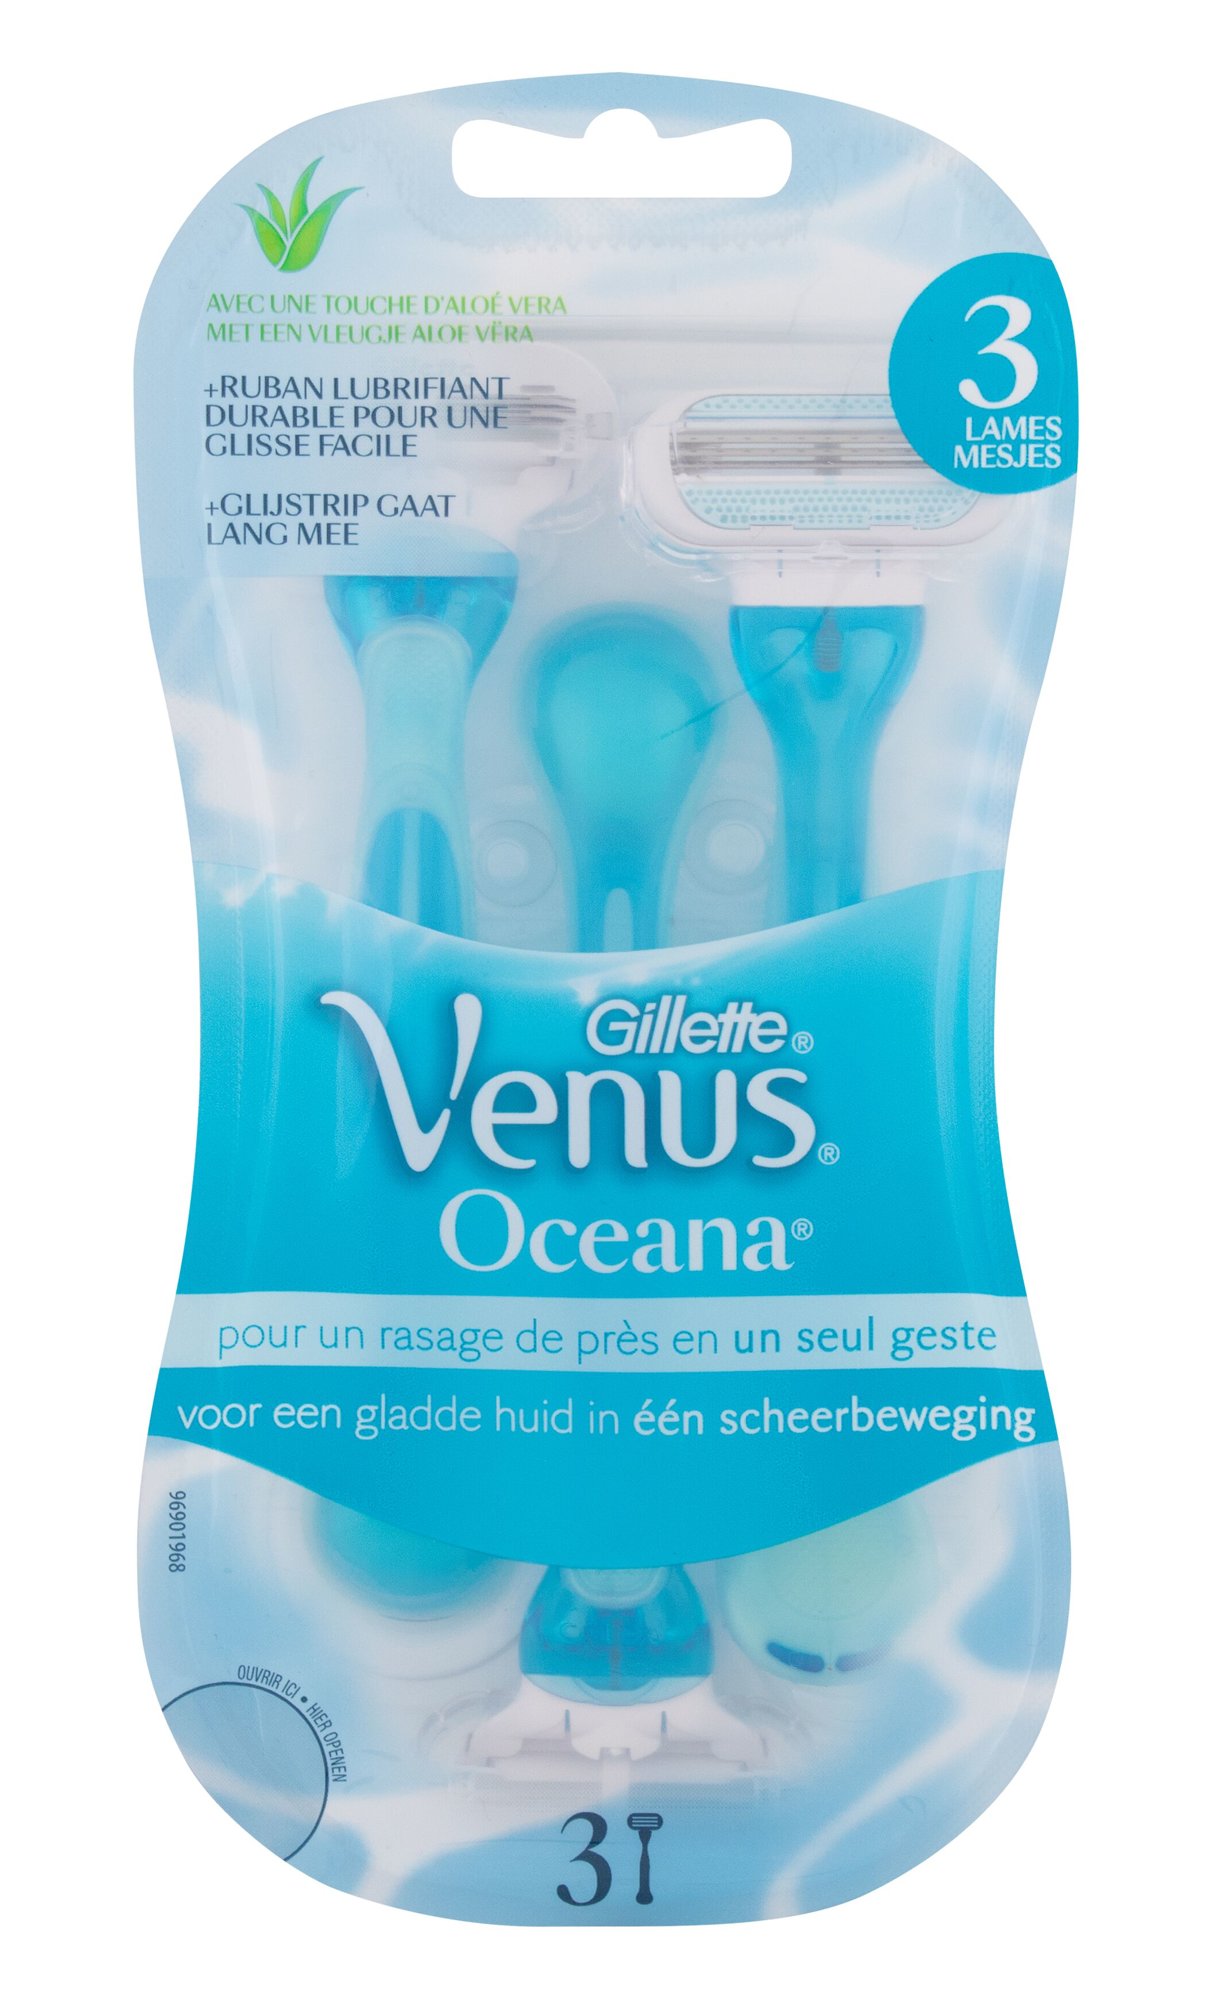 Gillette Venus Oceana skustuvas